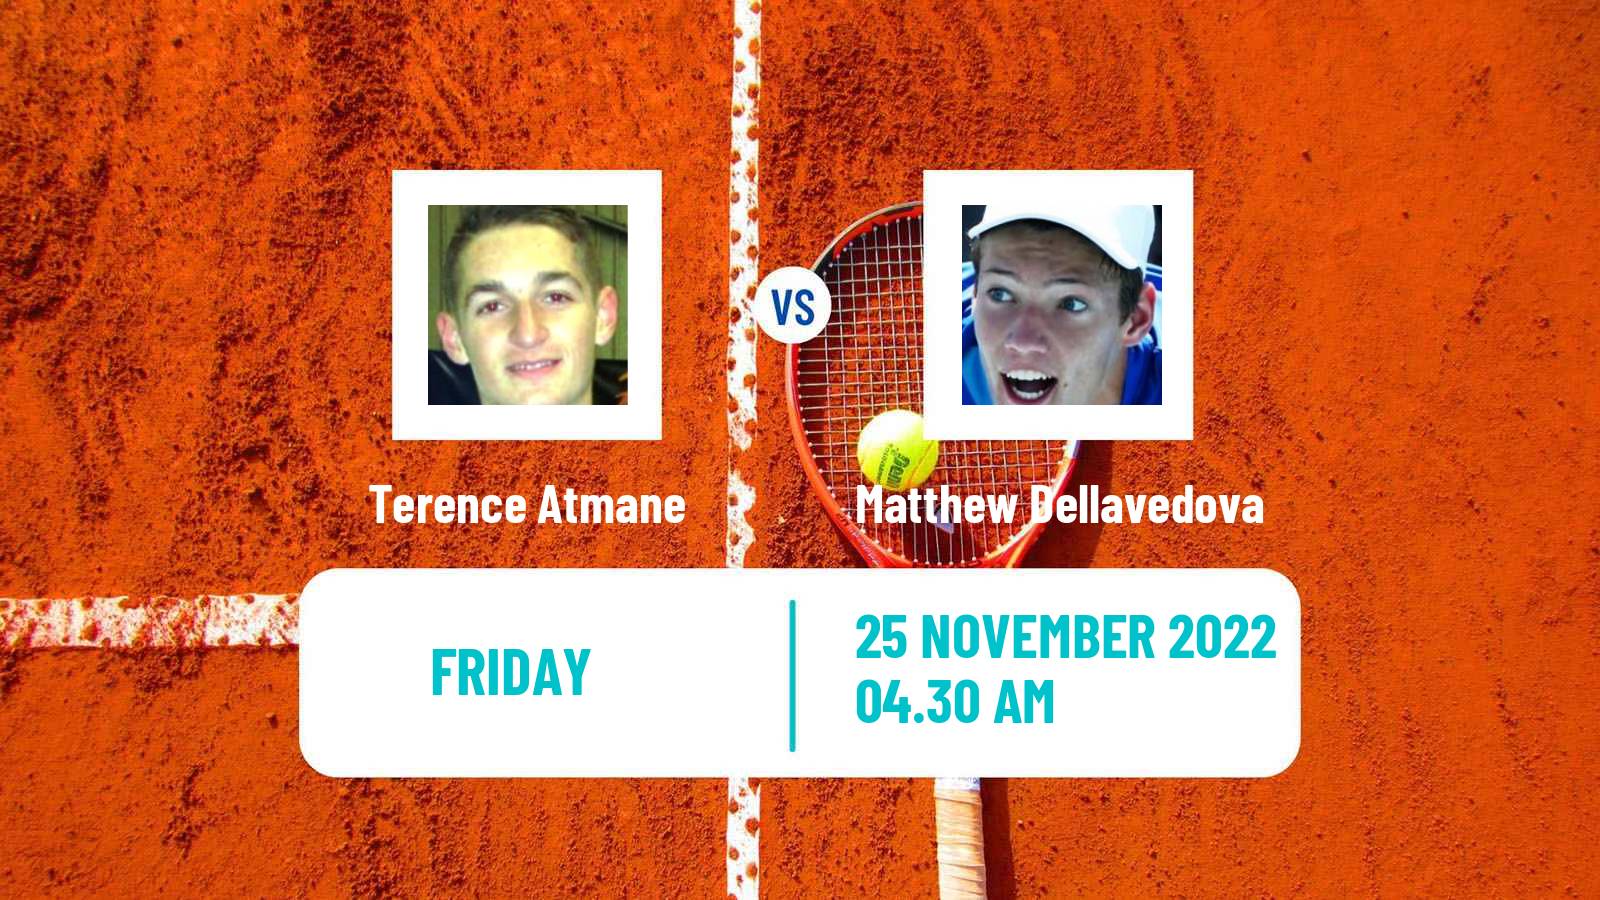 Tennis ITF Tournaments Terence Atmane - Matthew Dellavedova